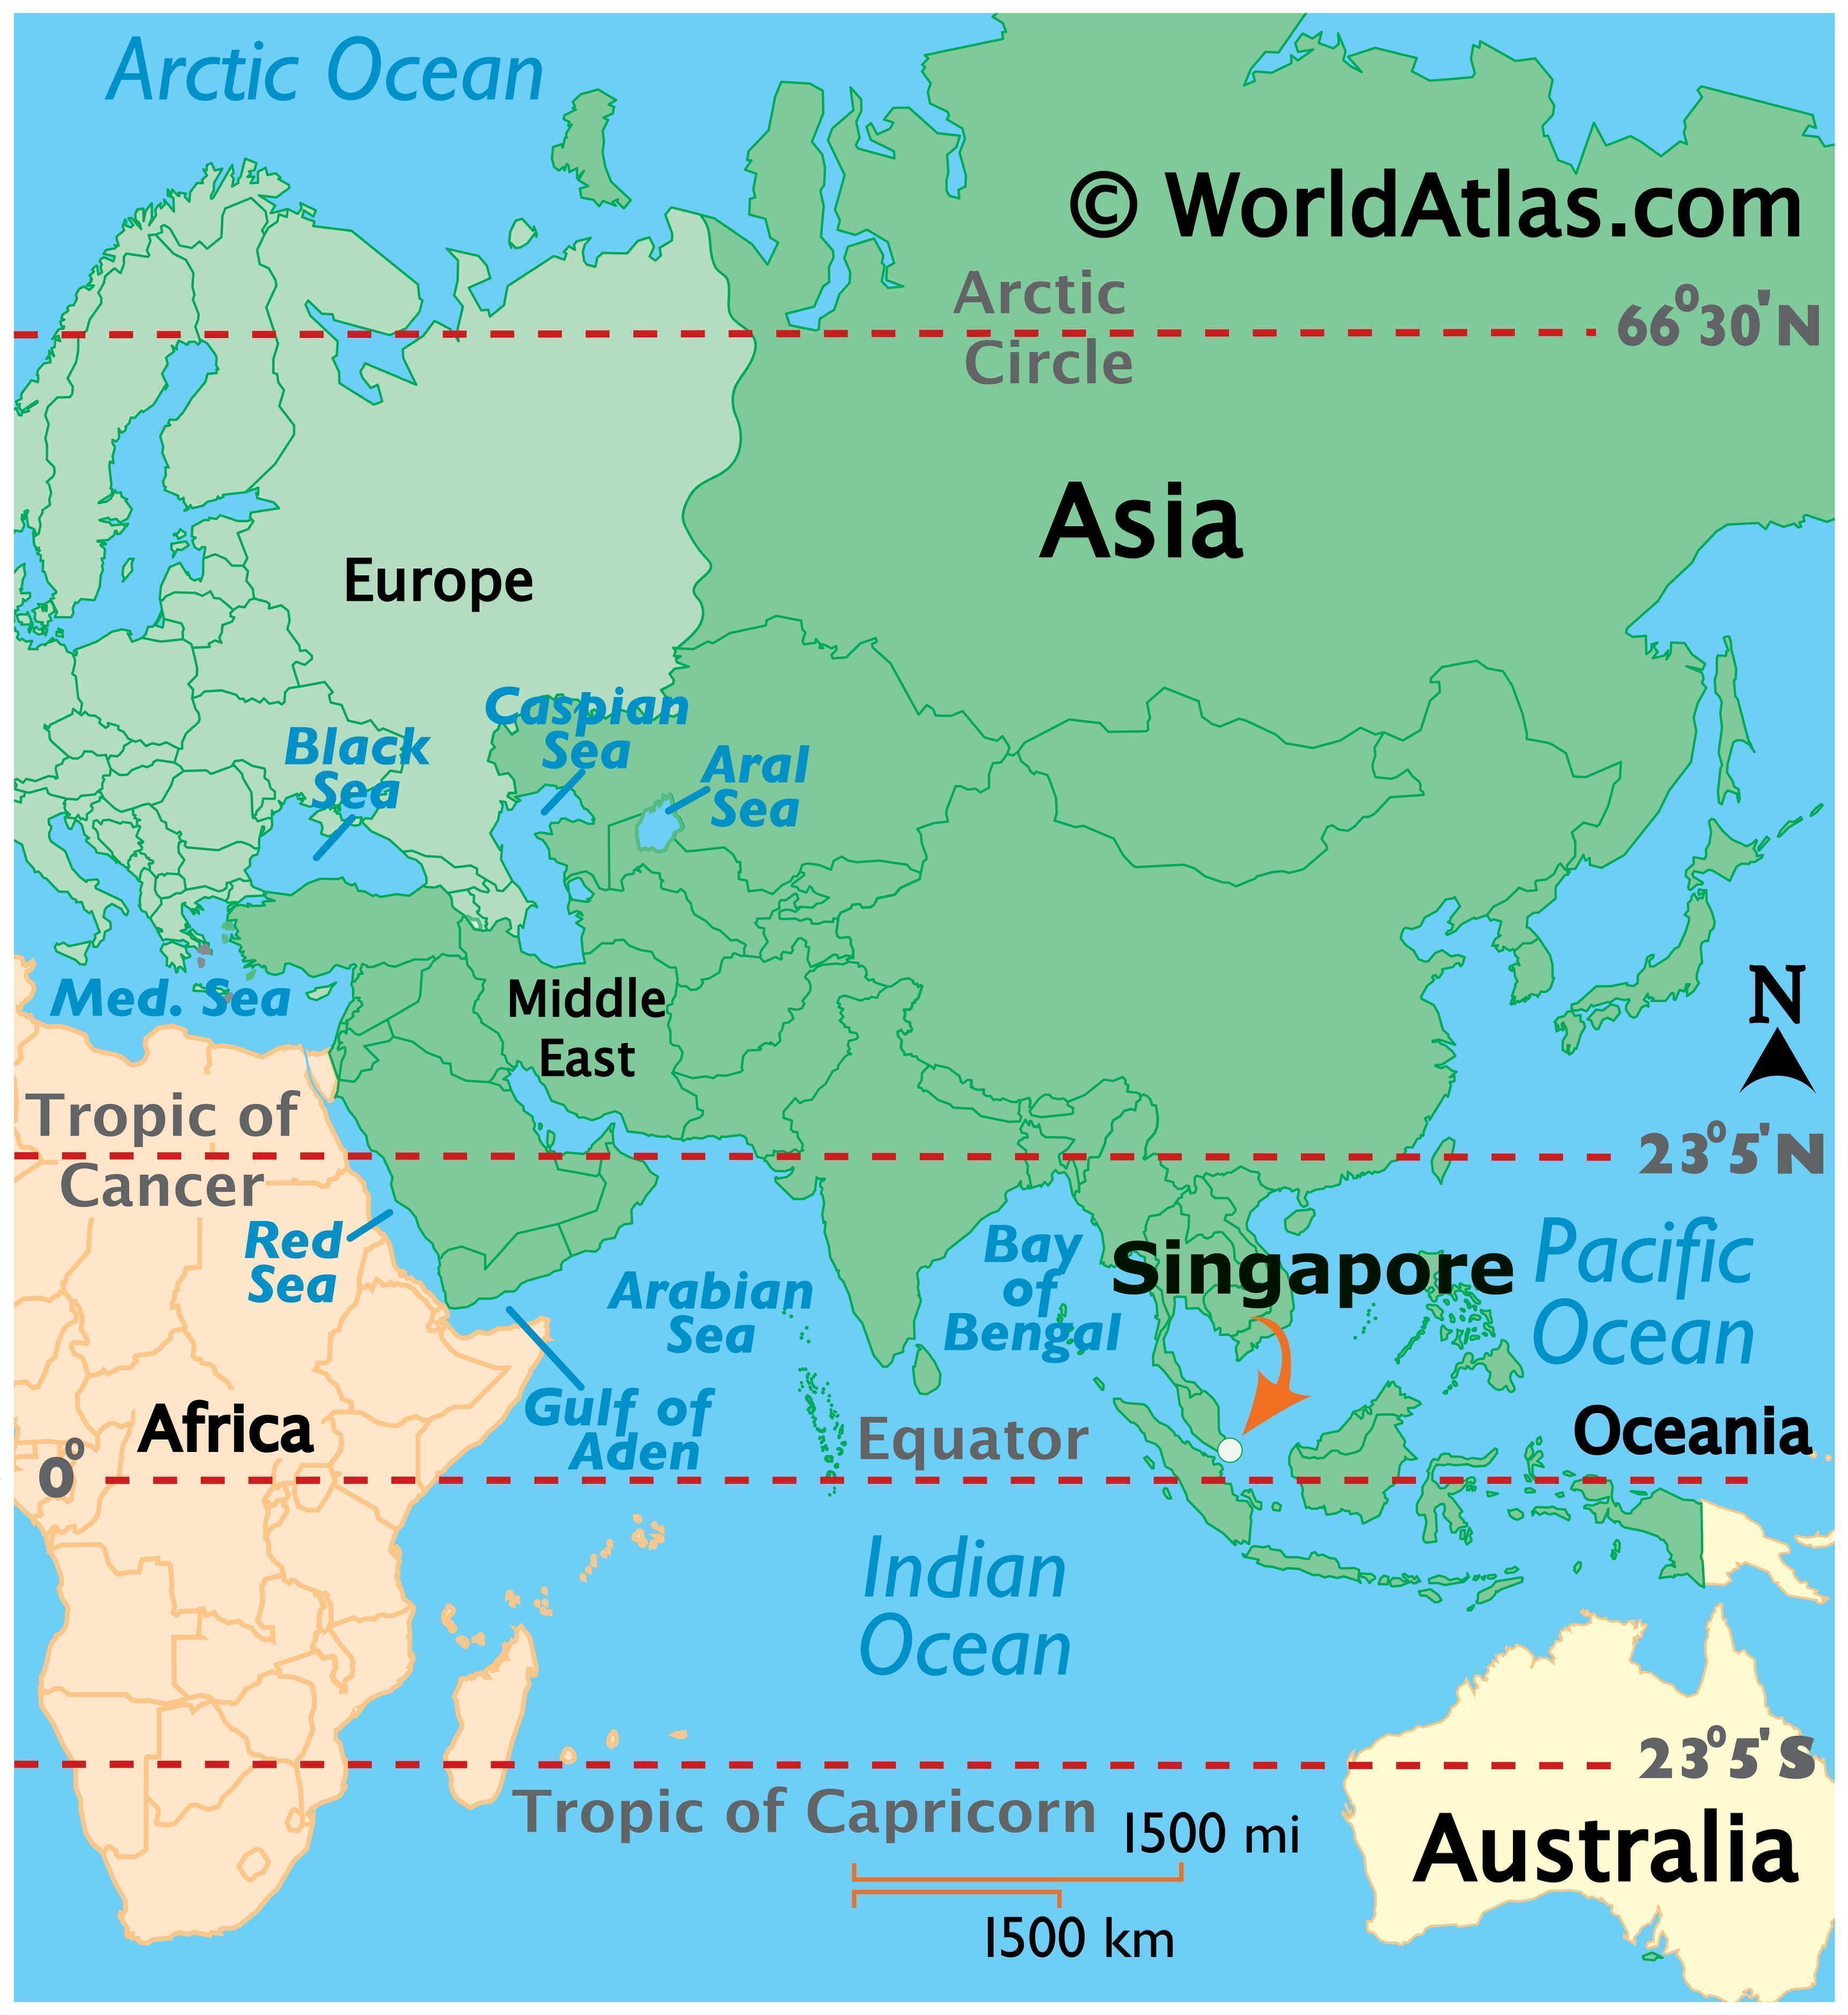 Singapore Map / Geography of Singapore / Map of Singapore - Worldatlas.com